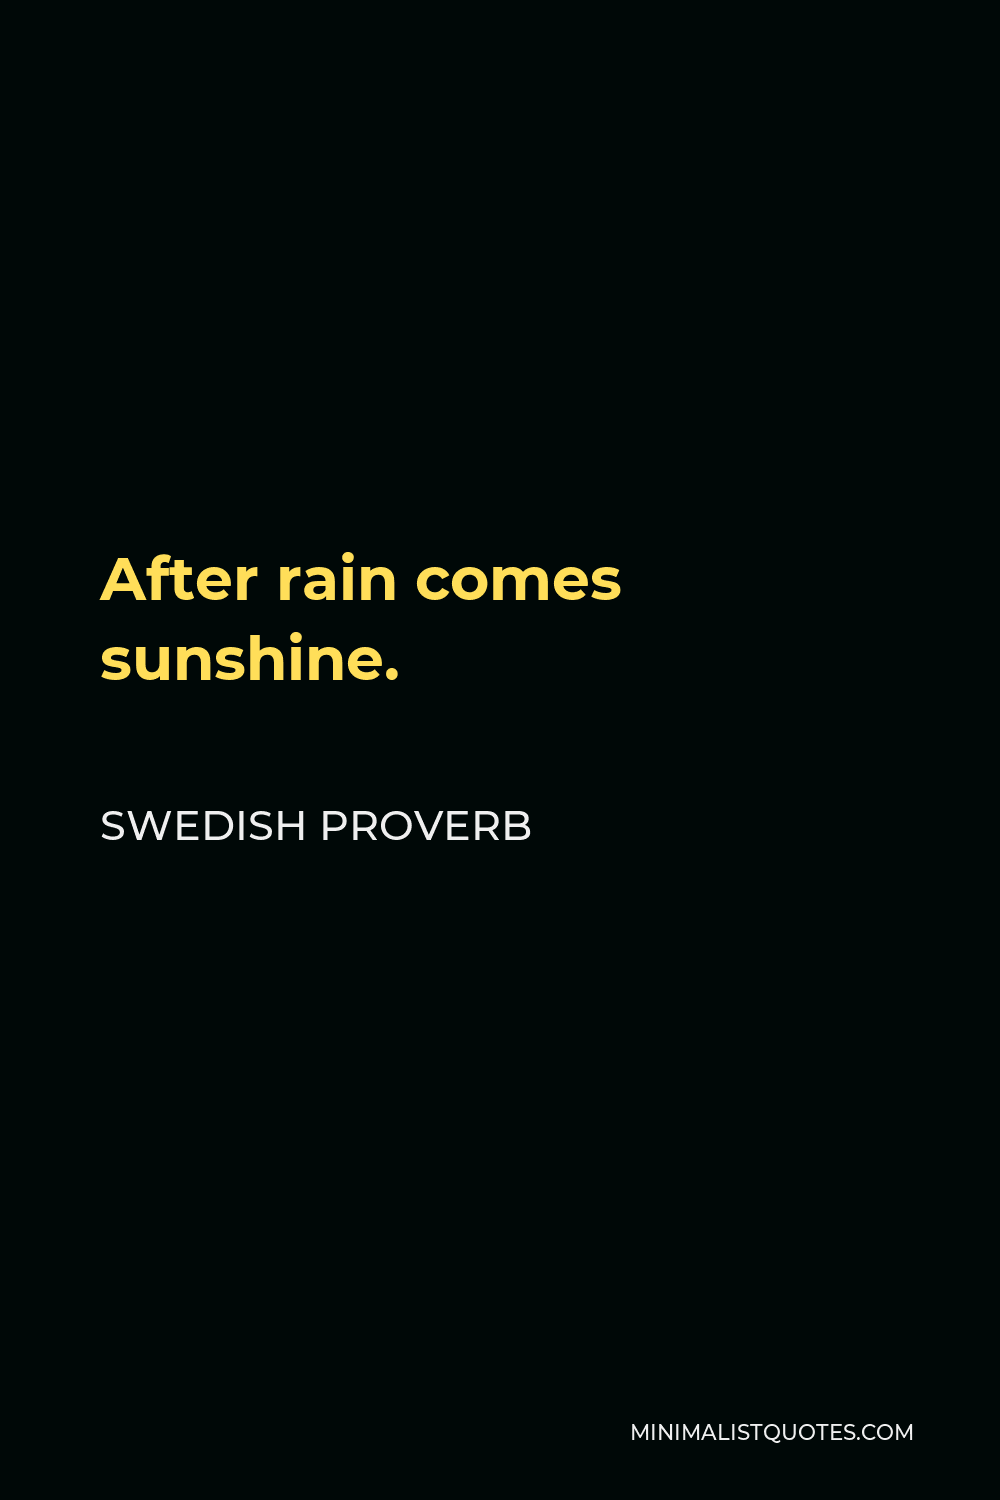 Swedish Proverb Quote - After rain comes sunshine.